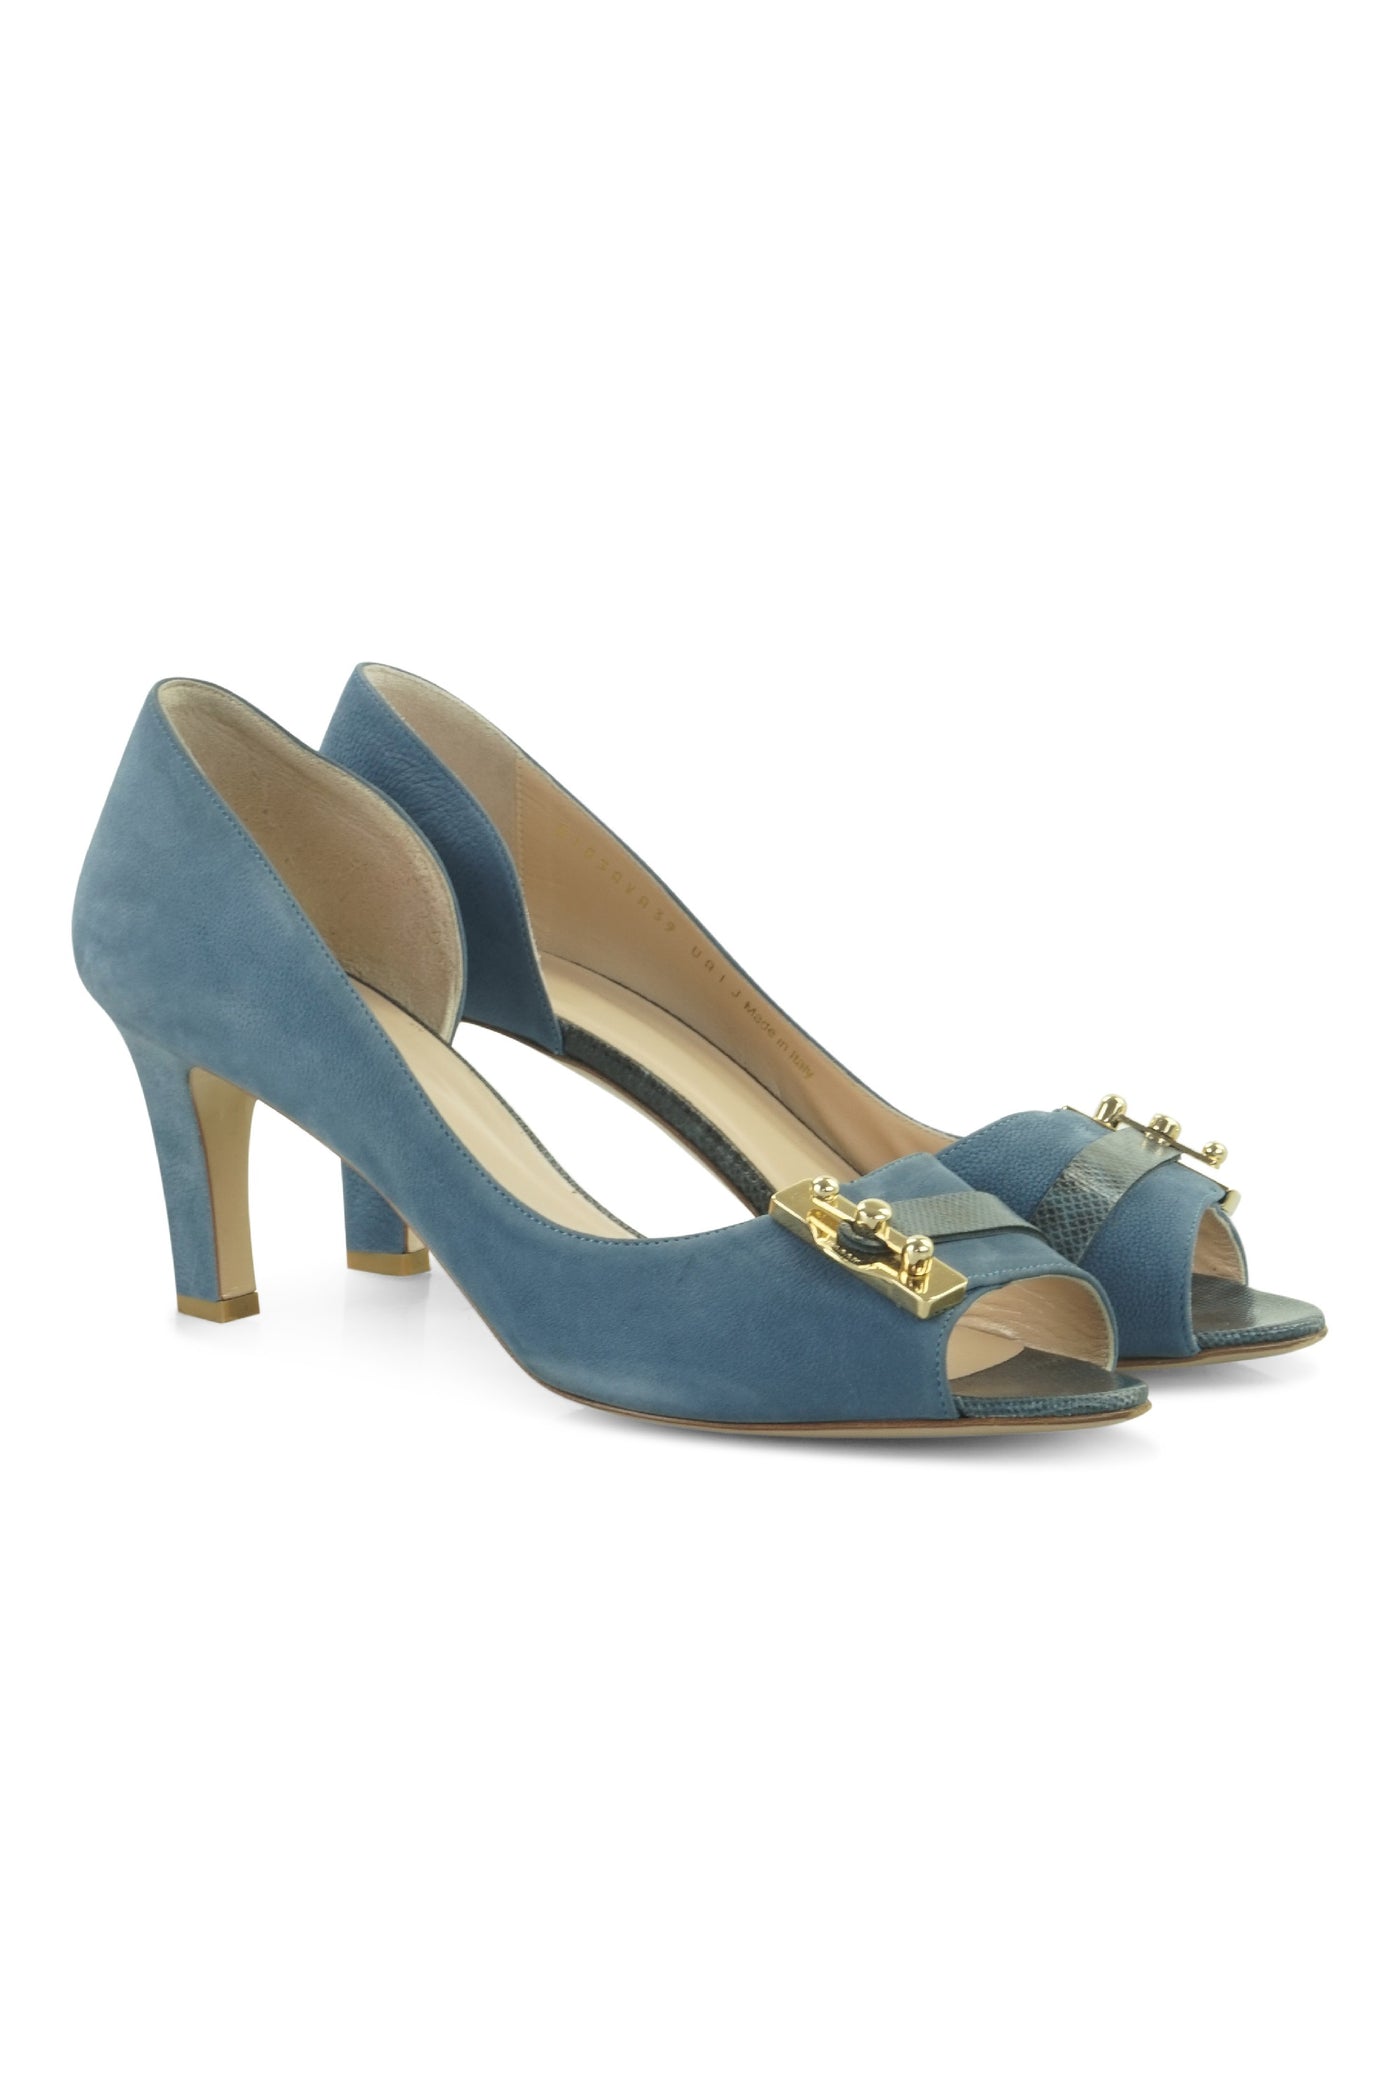 Giosava heels in blue